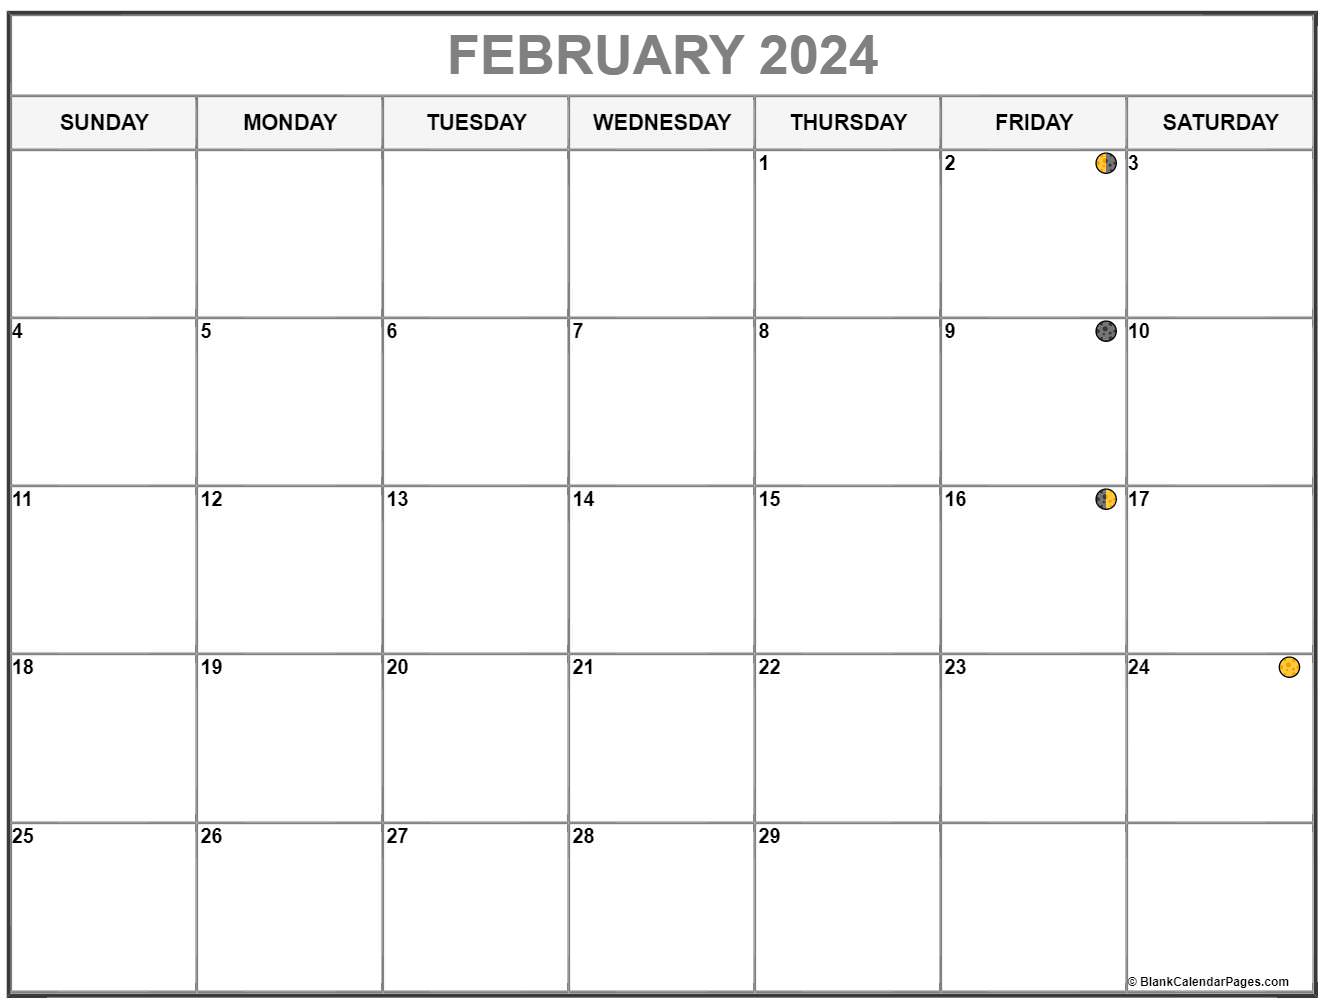 february-2023-lunar-calendar-moon-phase-calendar